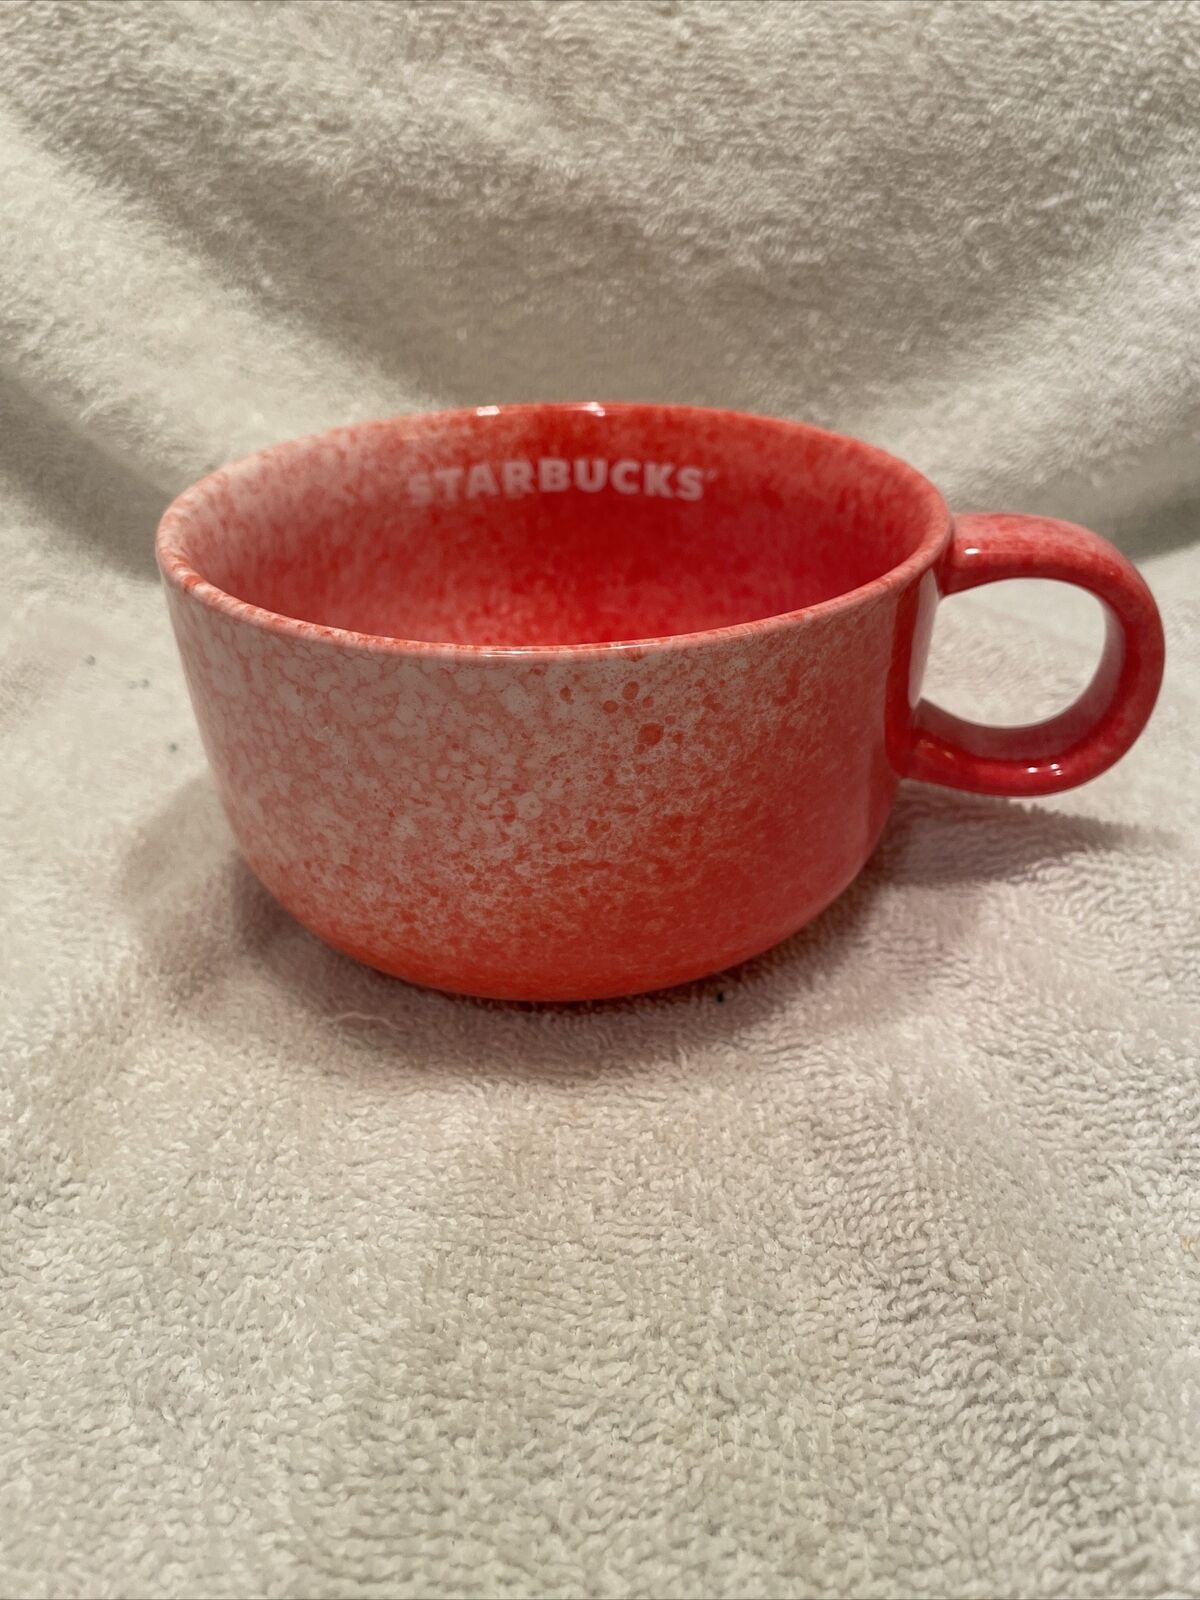 Starbucks Handled Bowl Speckled Pottery Mug Or Rice Bowl